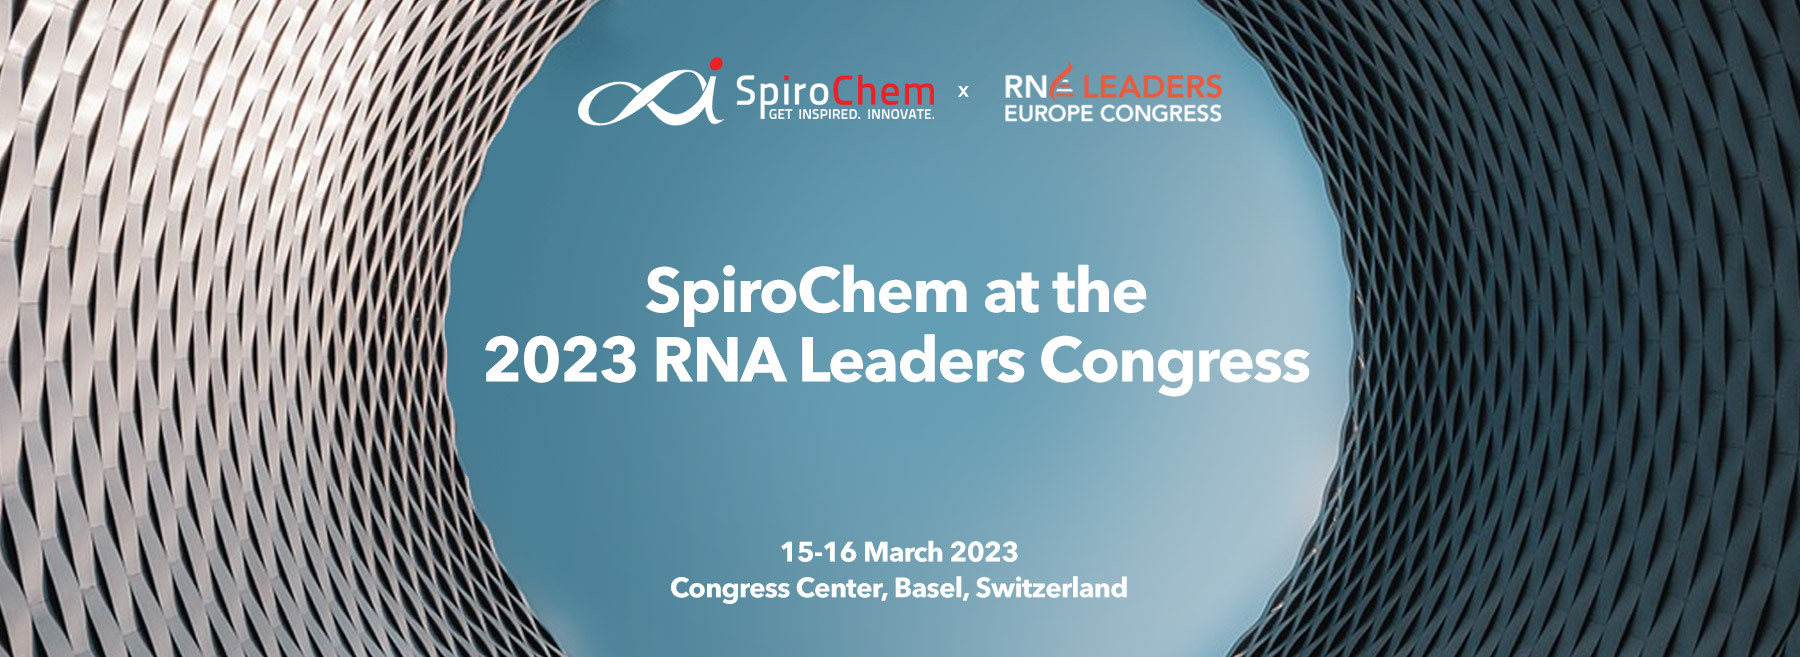 SpiroChem @ 2023 RNA Leaders Europe Congress